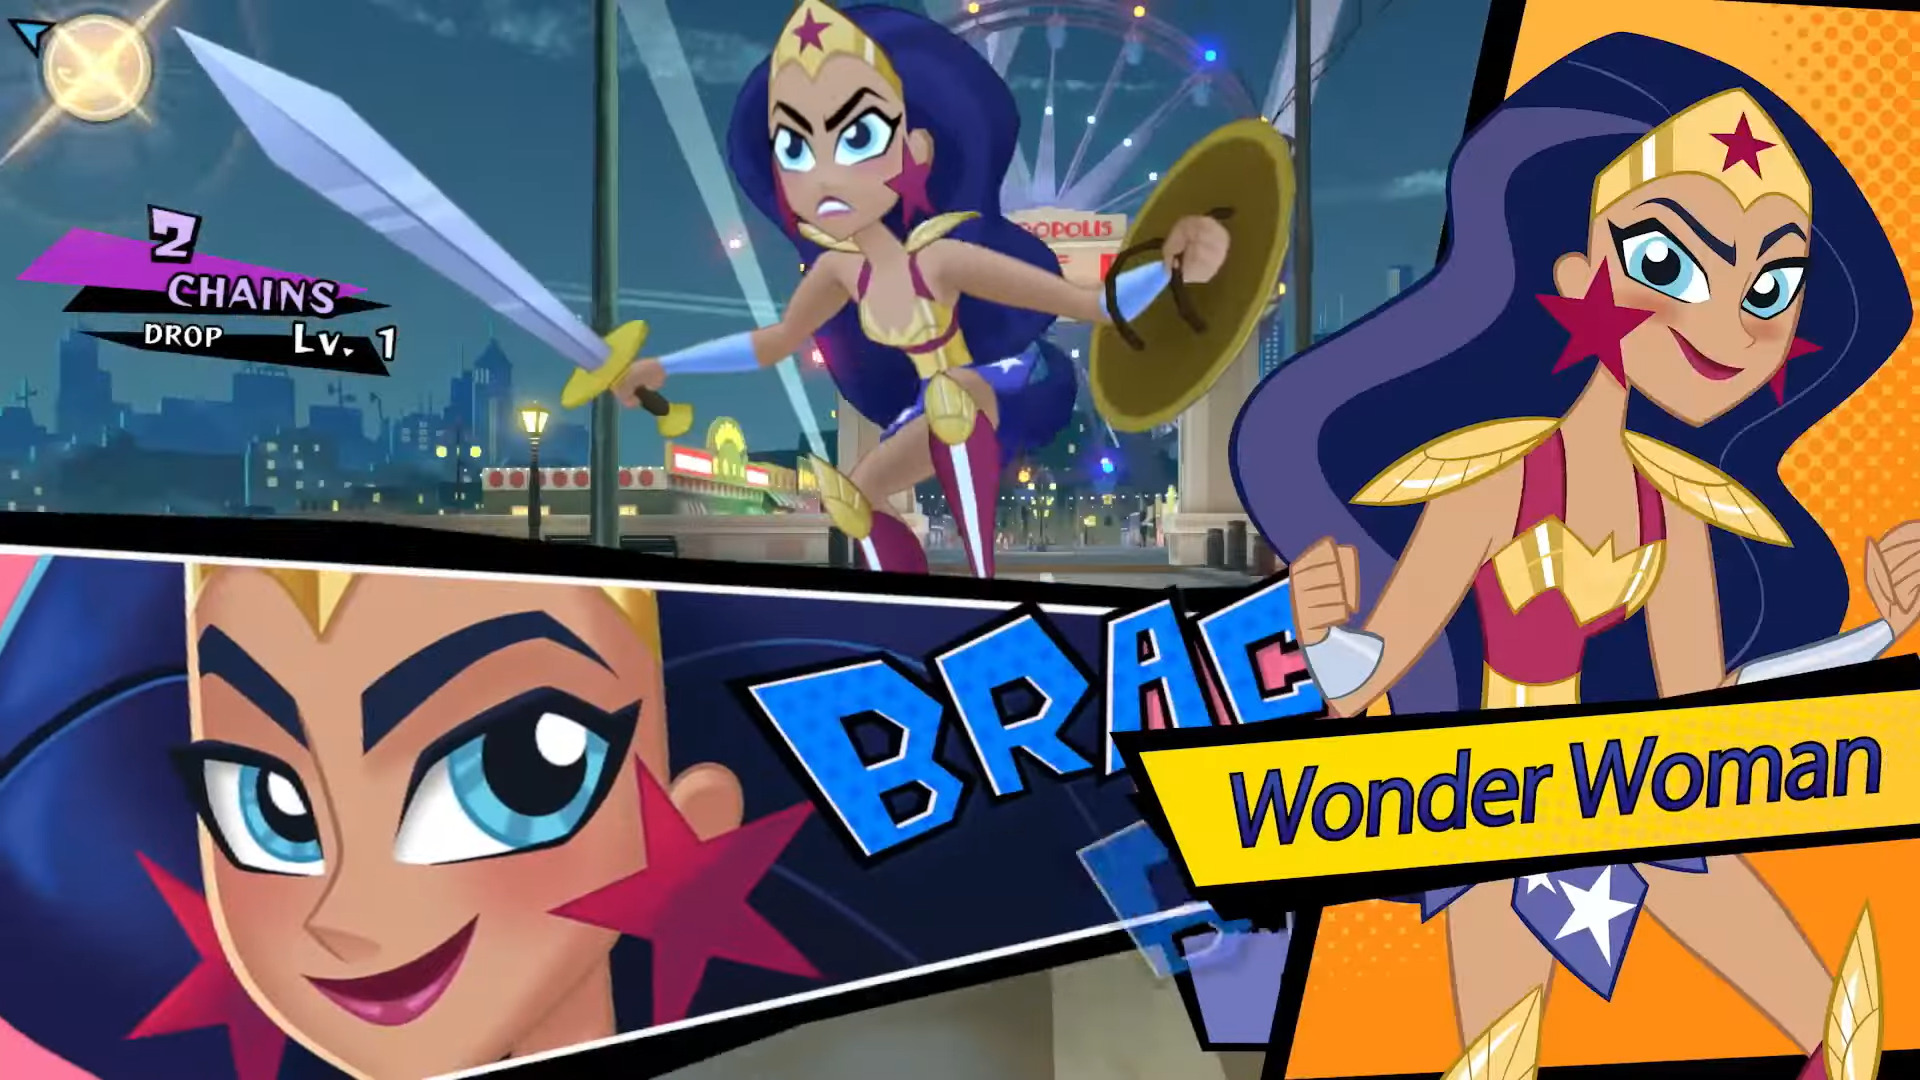 DC Super Hero Girls: Teen Power - Nintendo Switch, Nintendo